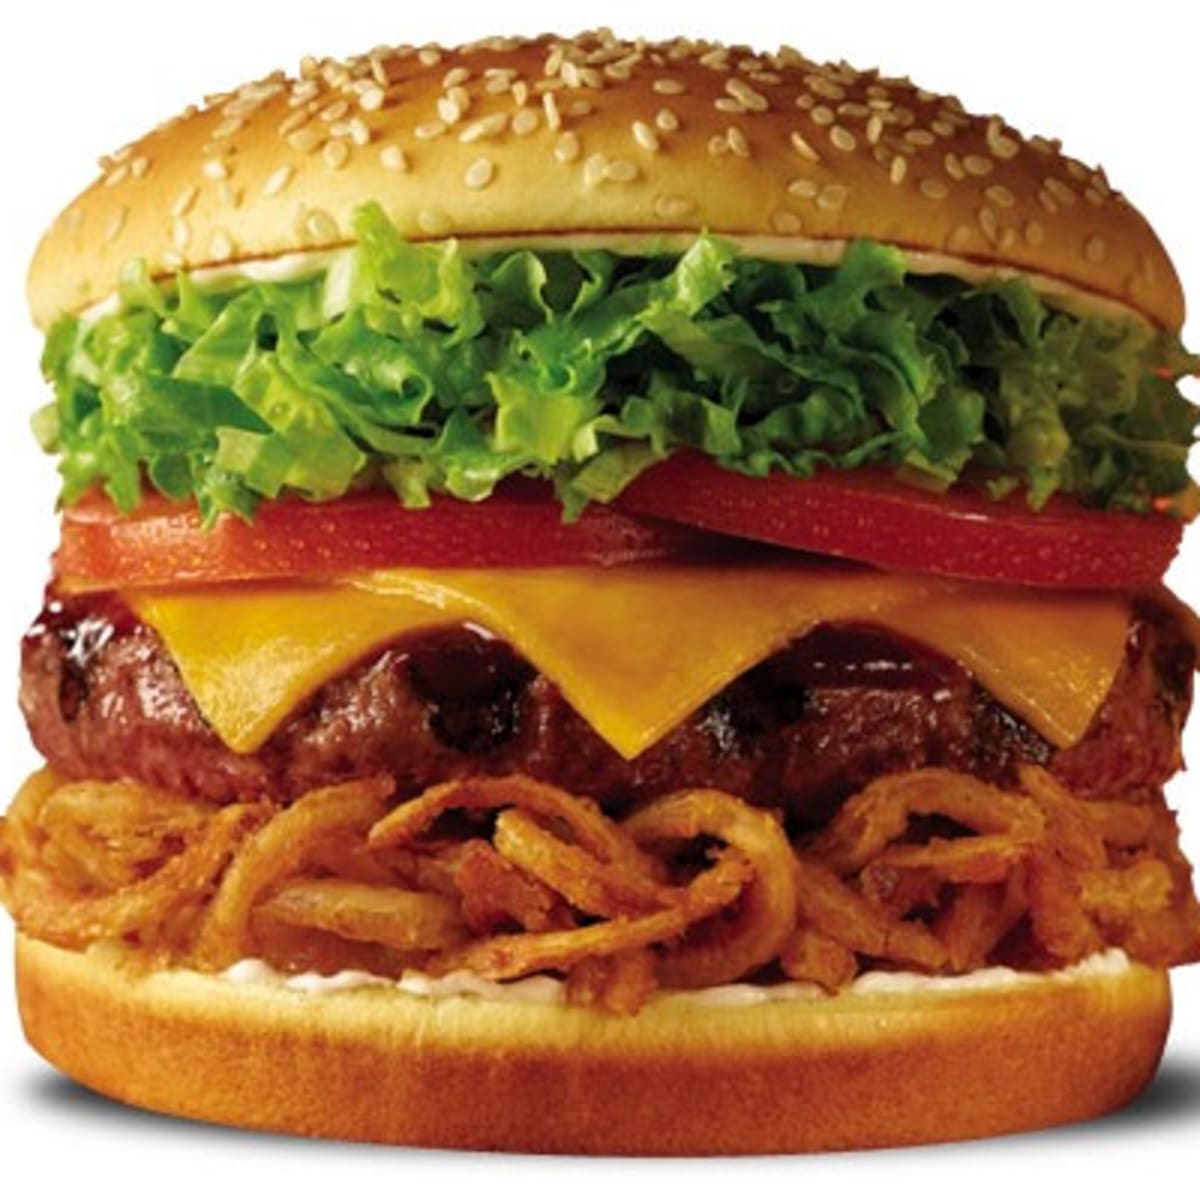 Does Burger King Have Milkshakes? (Types, Sizes + More)